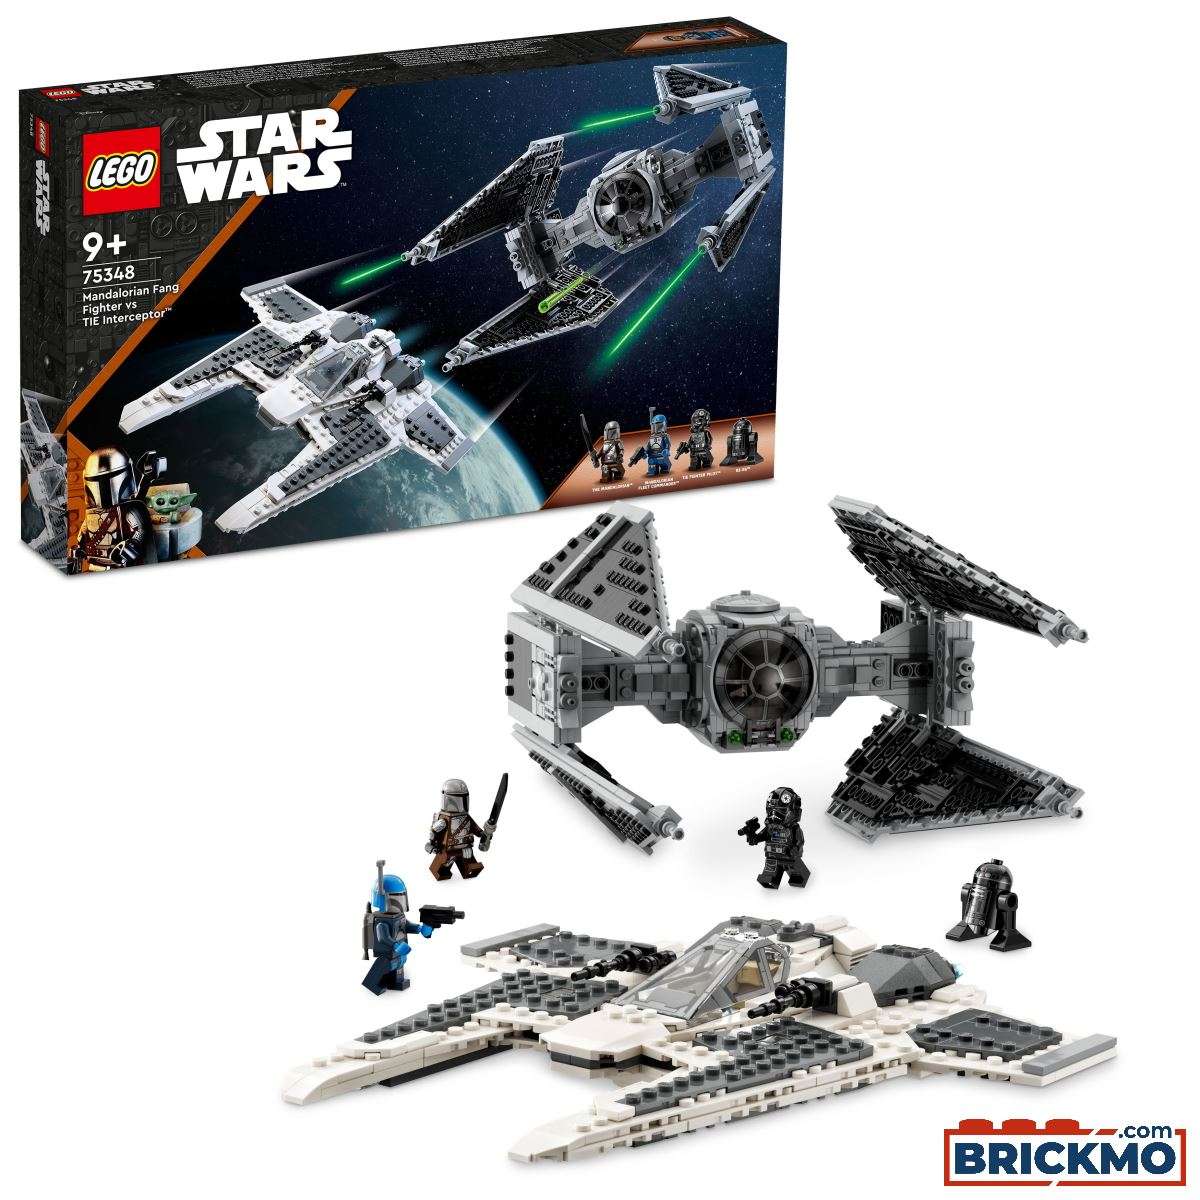 LEGO Star Wars 75348 Mandalorian Fang Fighter vs TIE Interceptor 75348